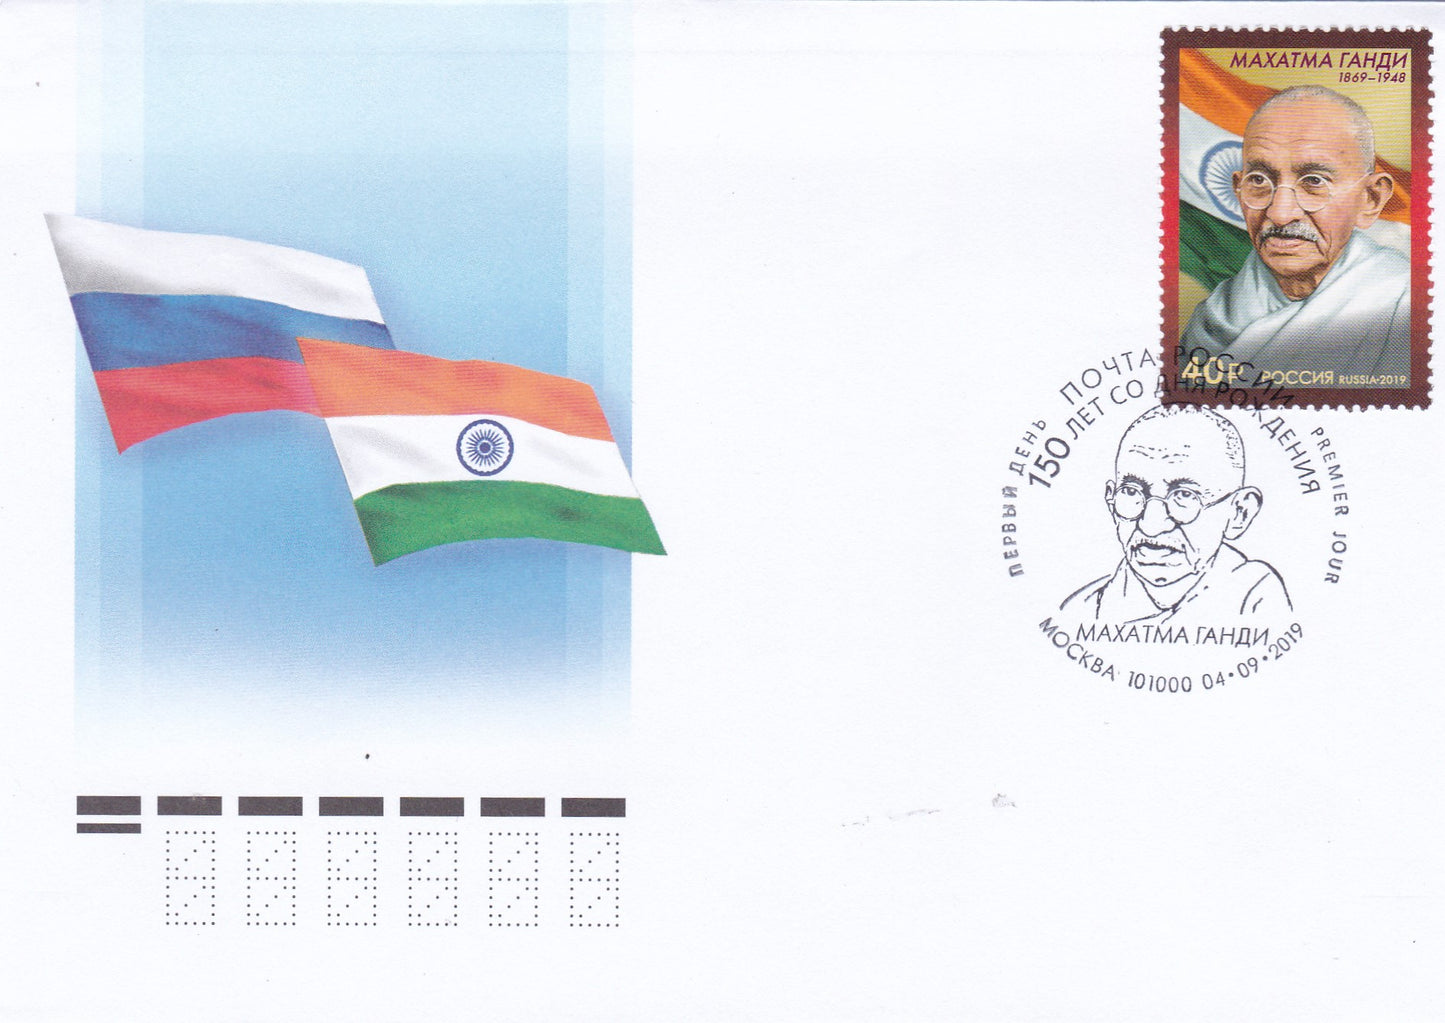 Russia Gandhi Mint stamp-150th anniversary 2019-FDC